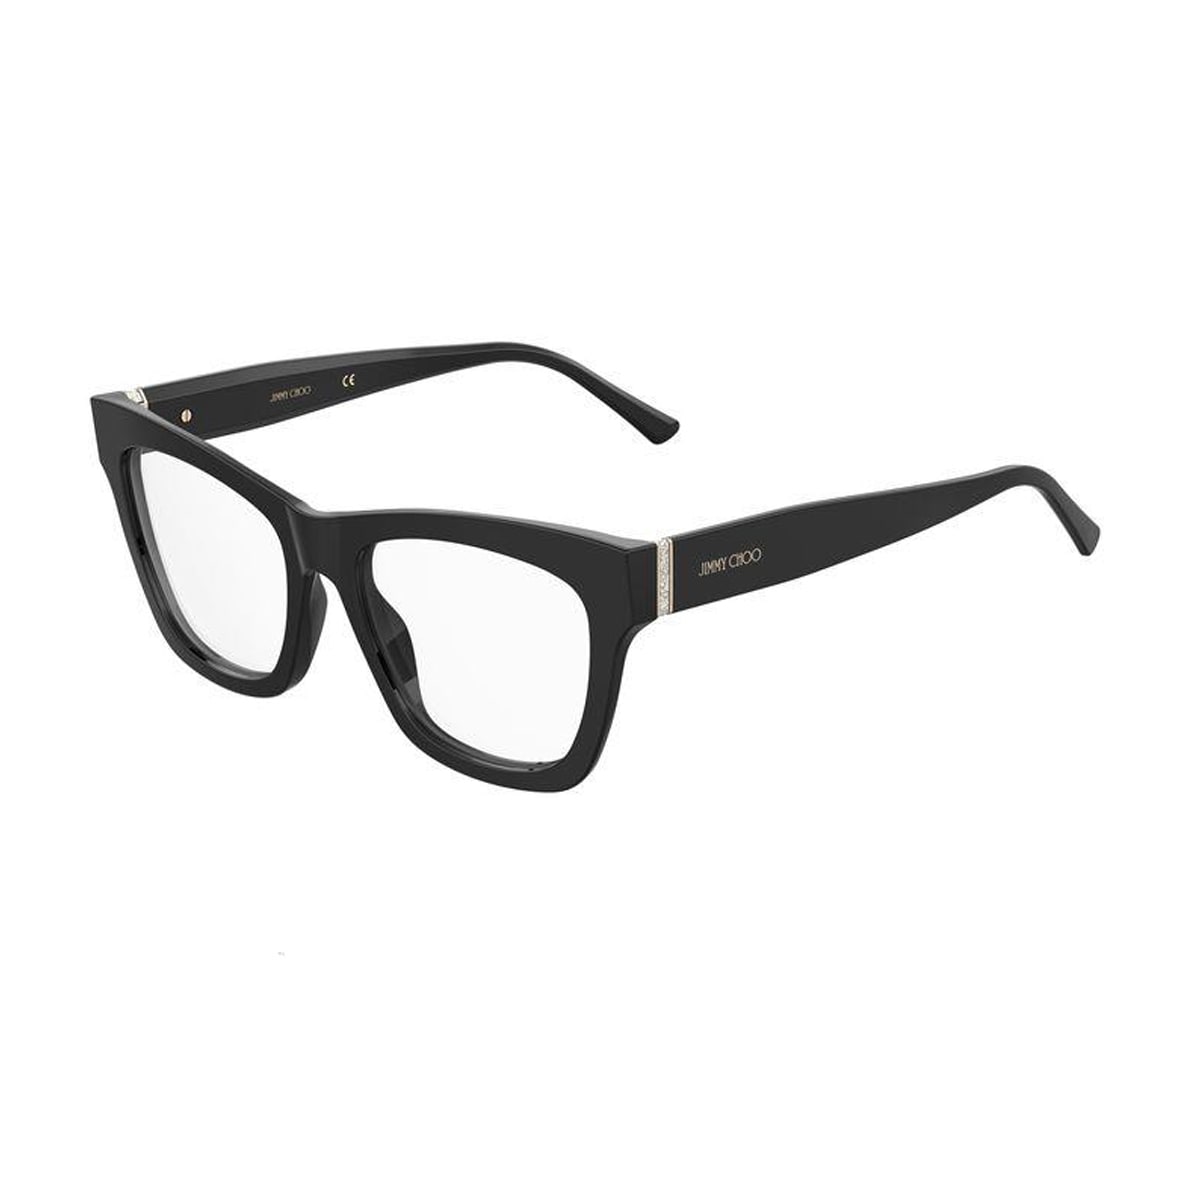 Jimmy Choo Eyewear Jc351 Glasses